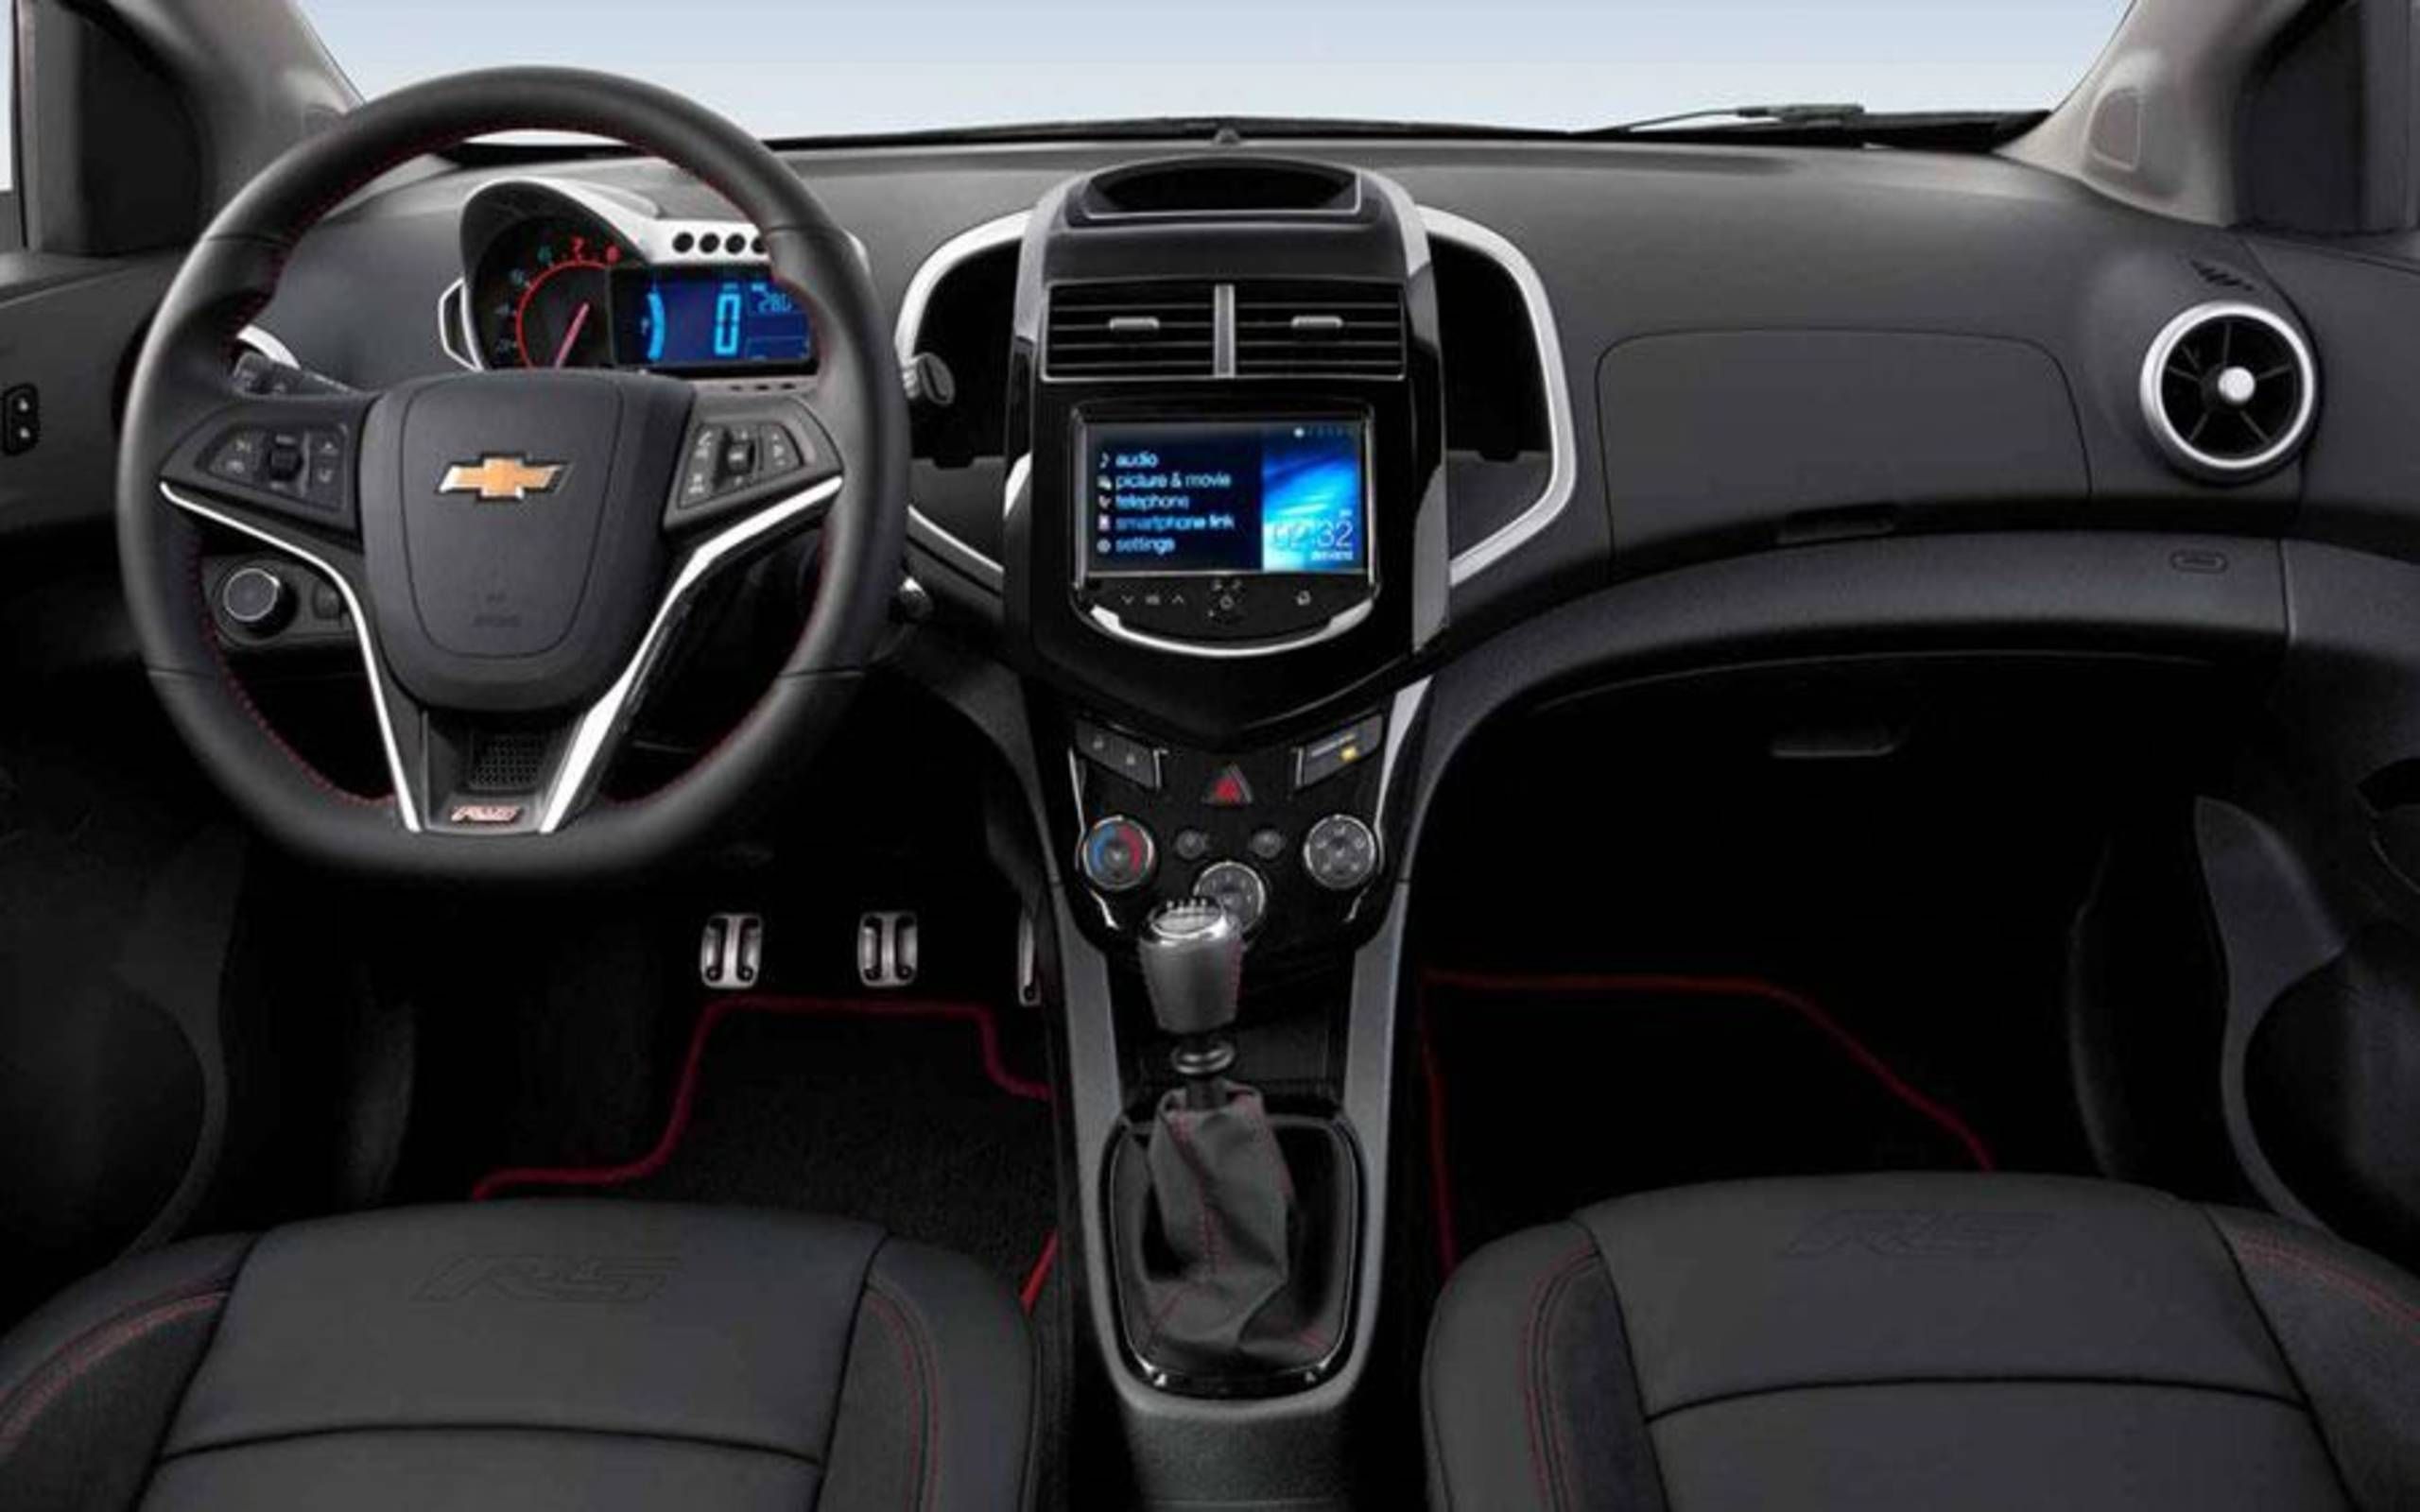 2014 Chevrolet Sonic LT Hatchback review notes